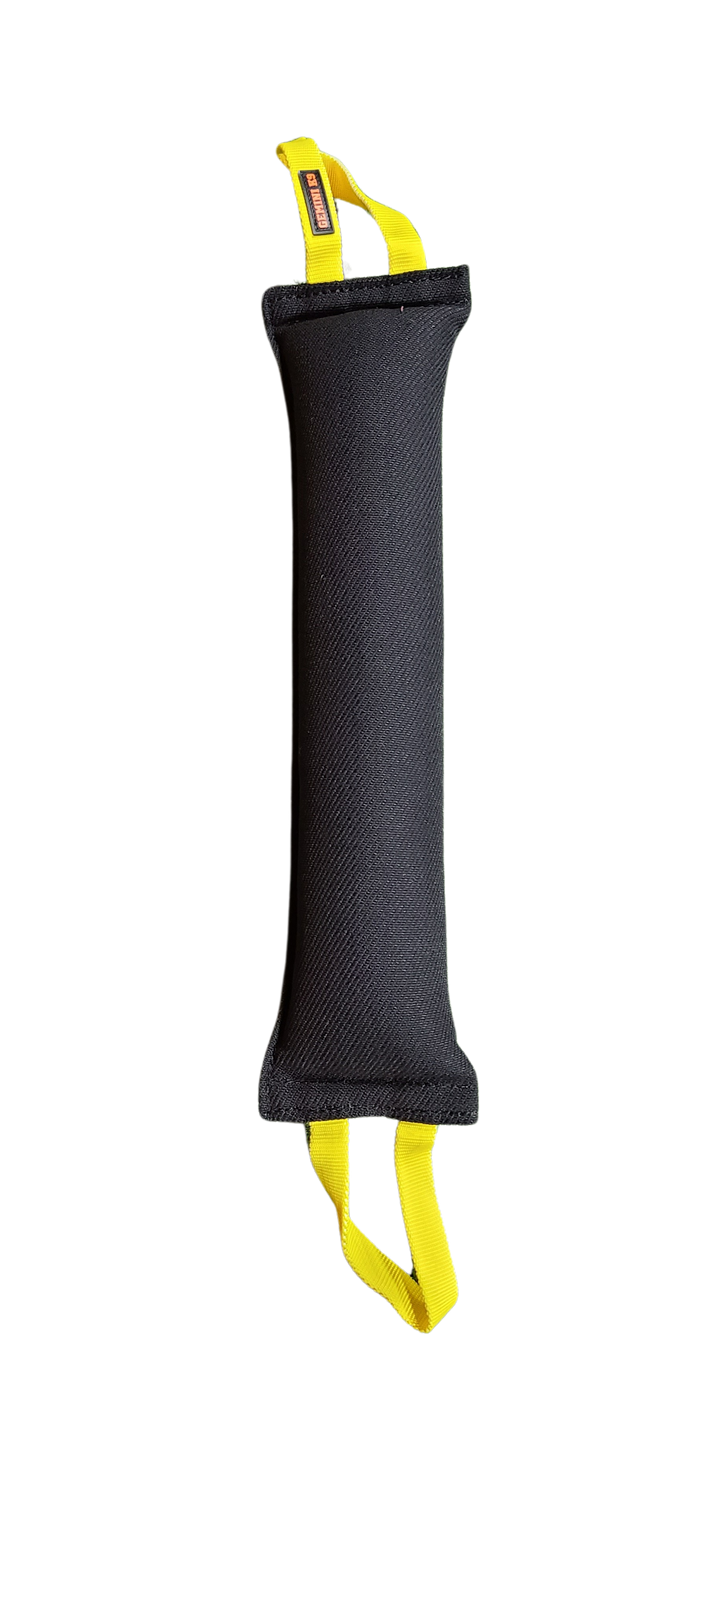 X-Large Bite Suit material Tug